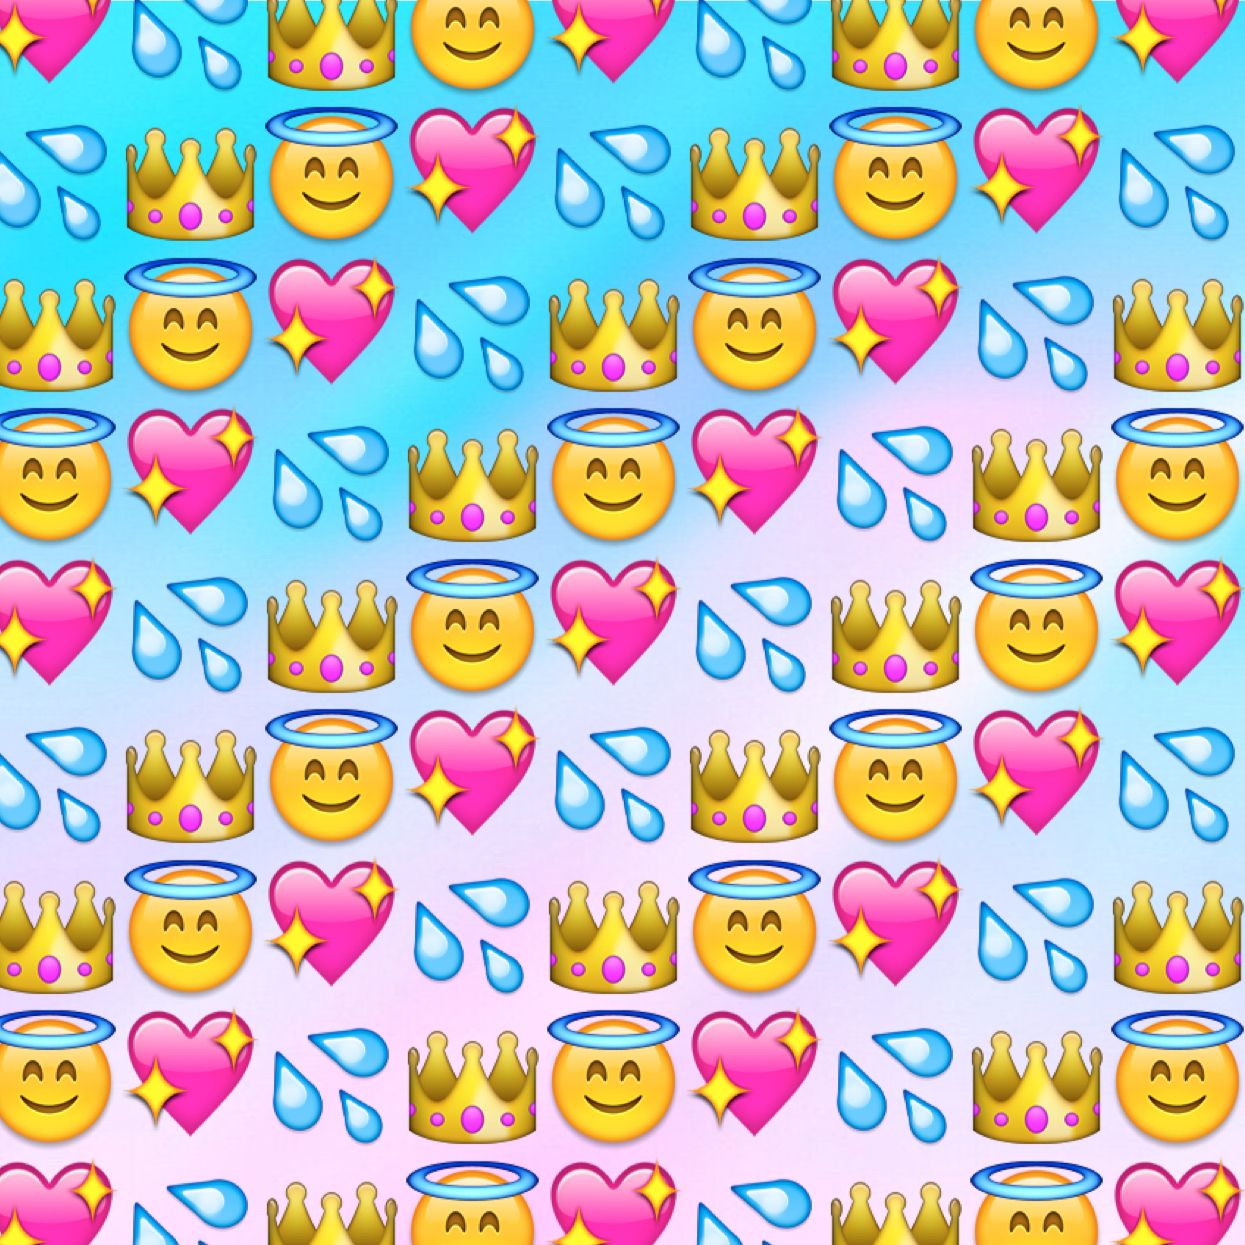 Aesthetic Emoji Wallpaper  iOS Emoji Aesthetic Wallpapers iPhone